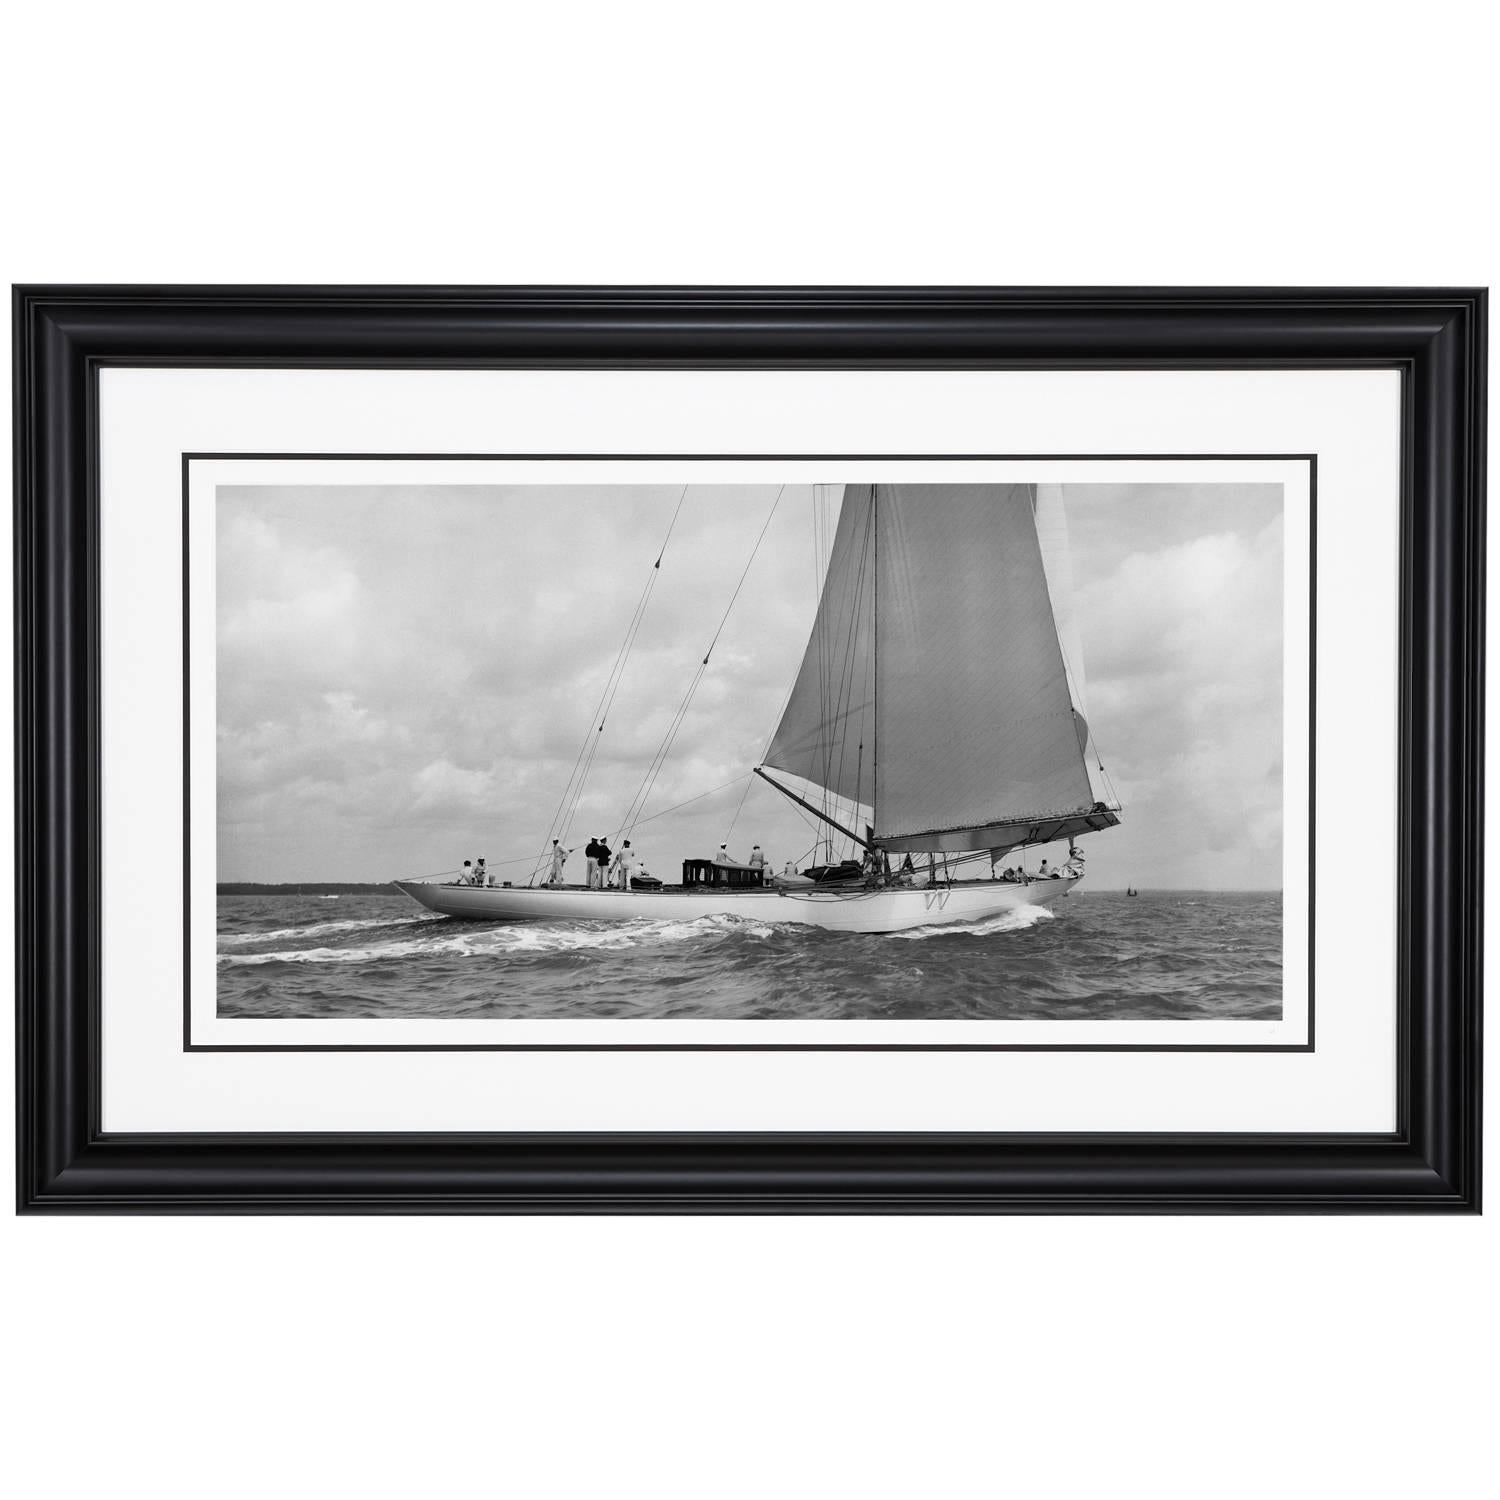 Sailing Yacht Velsheda, 1936 - Photograph by Frank Beken